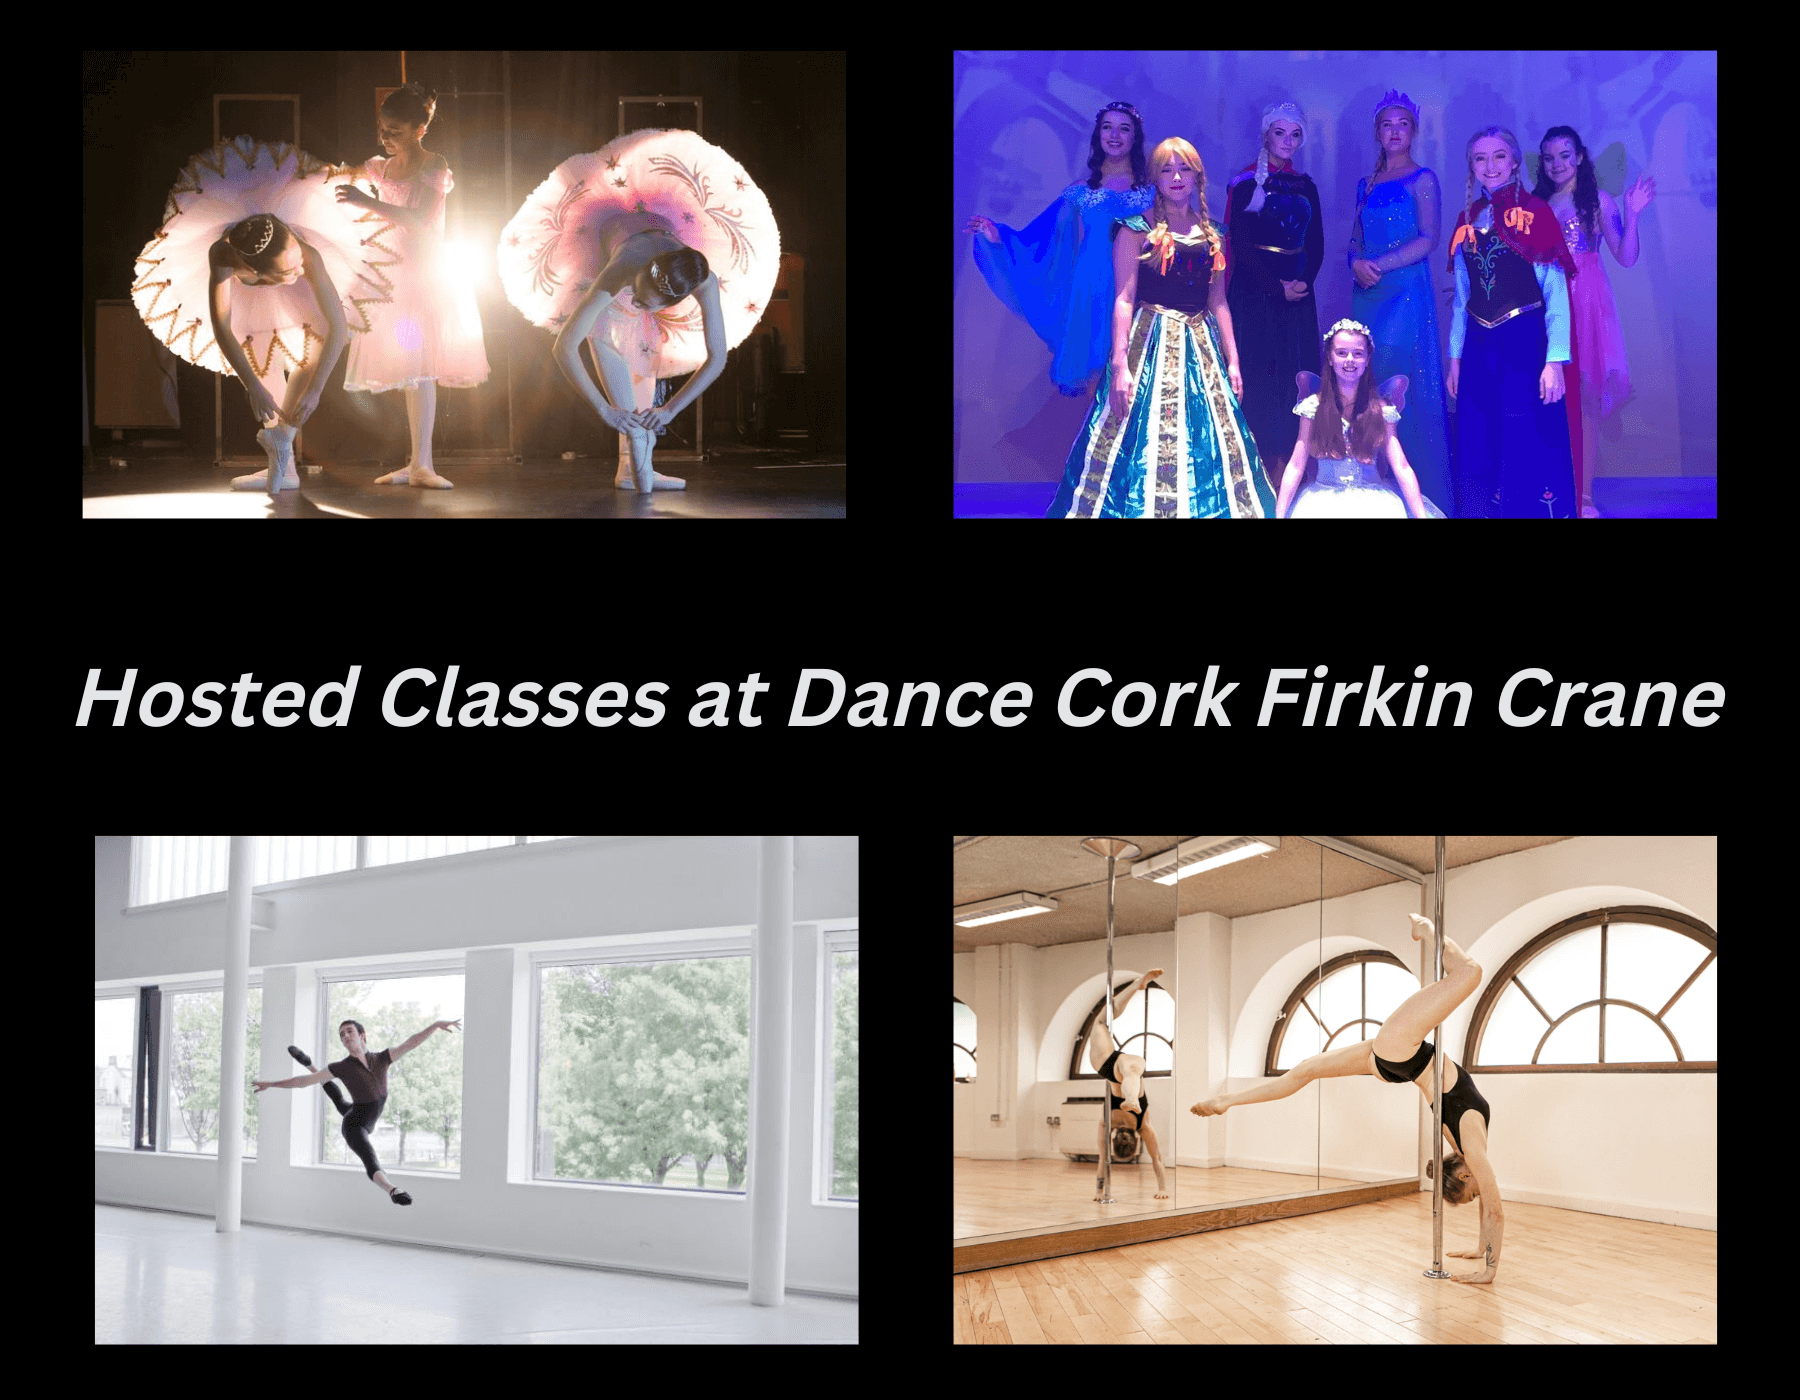 Firkin Crane Theatre, Cork: Classes Held at Dance Cork Firkin Crane